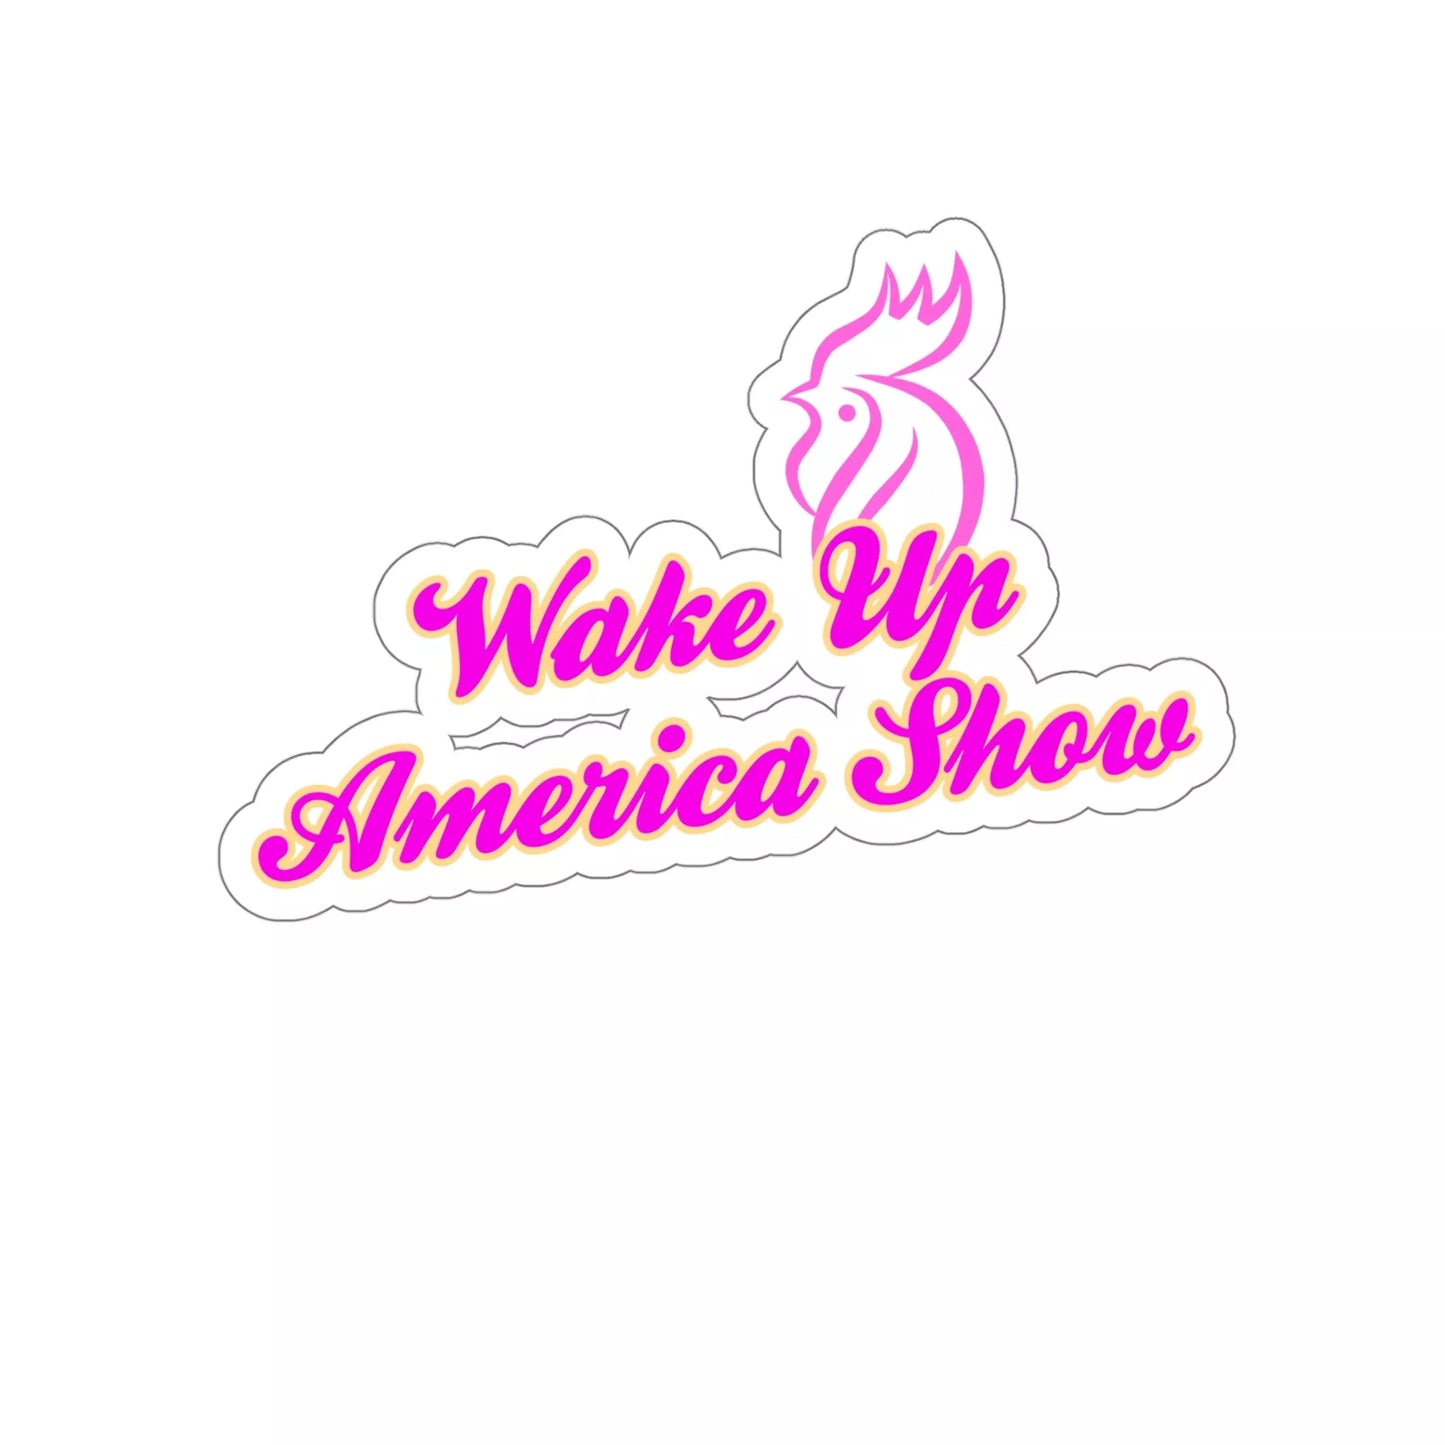 Wake Up America Show Stickers